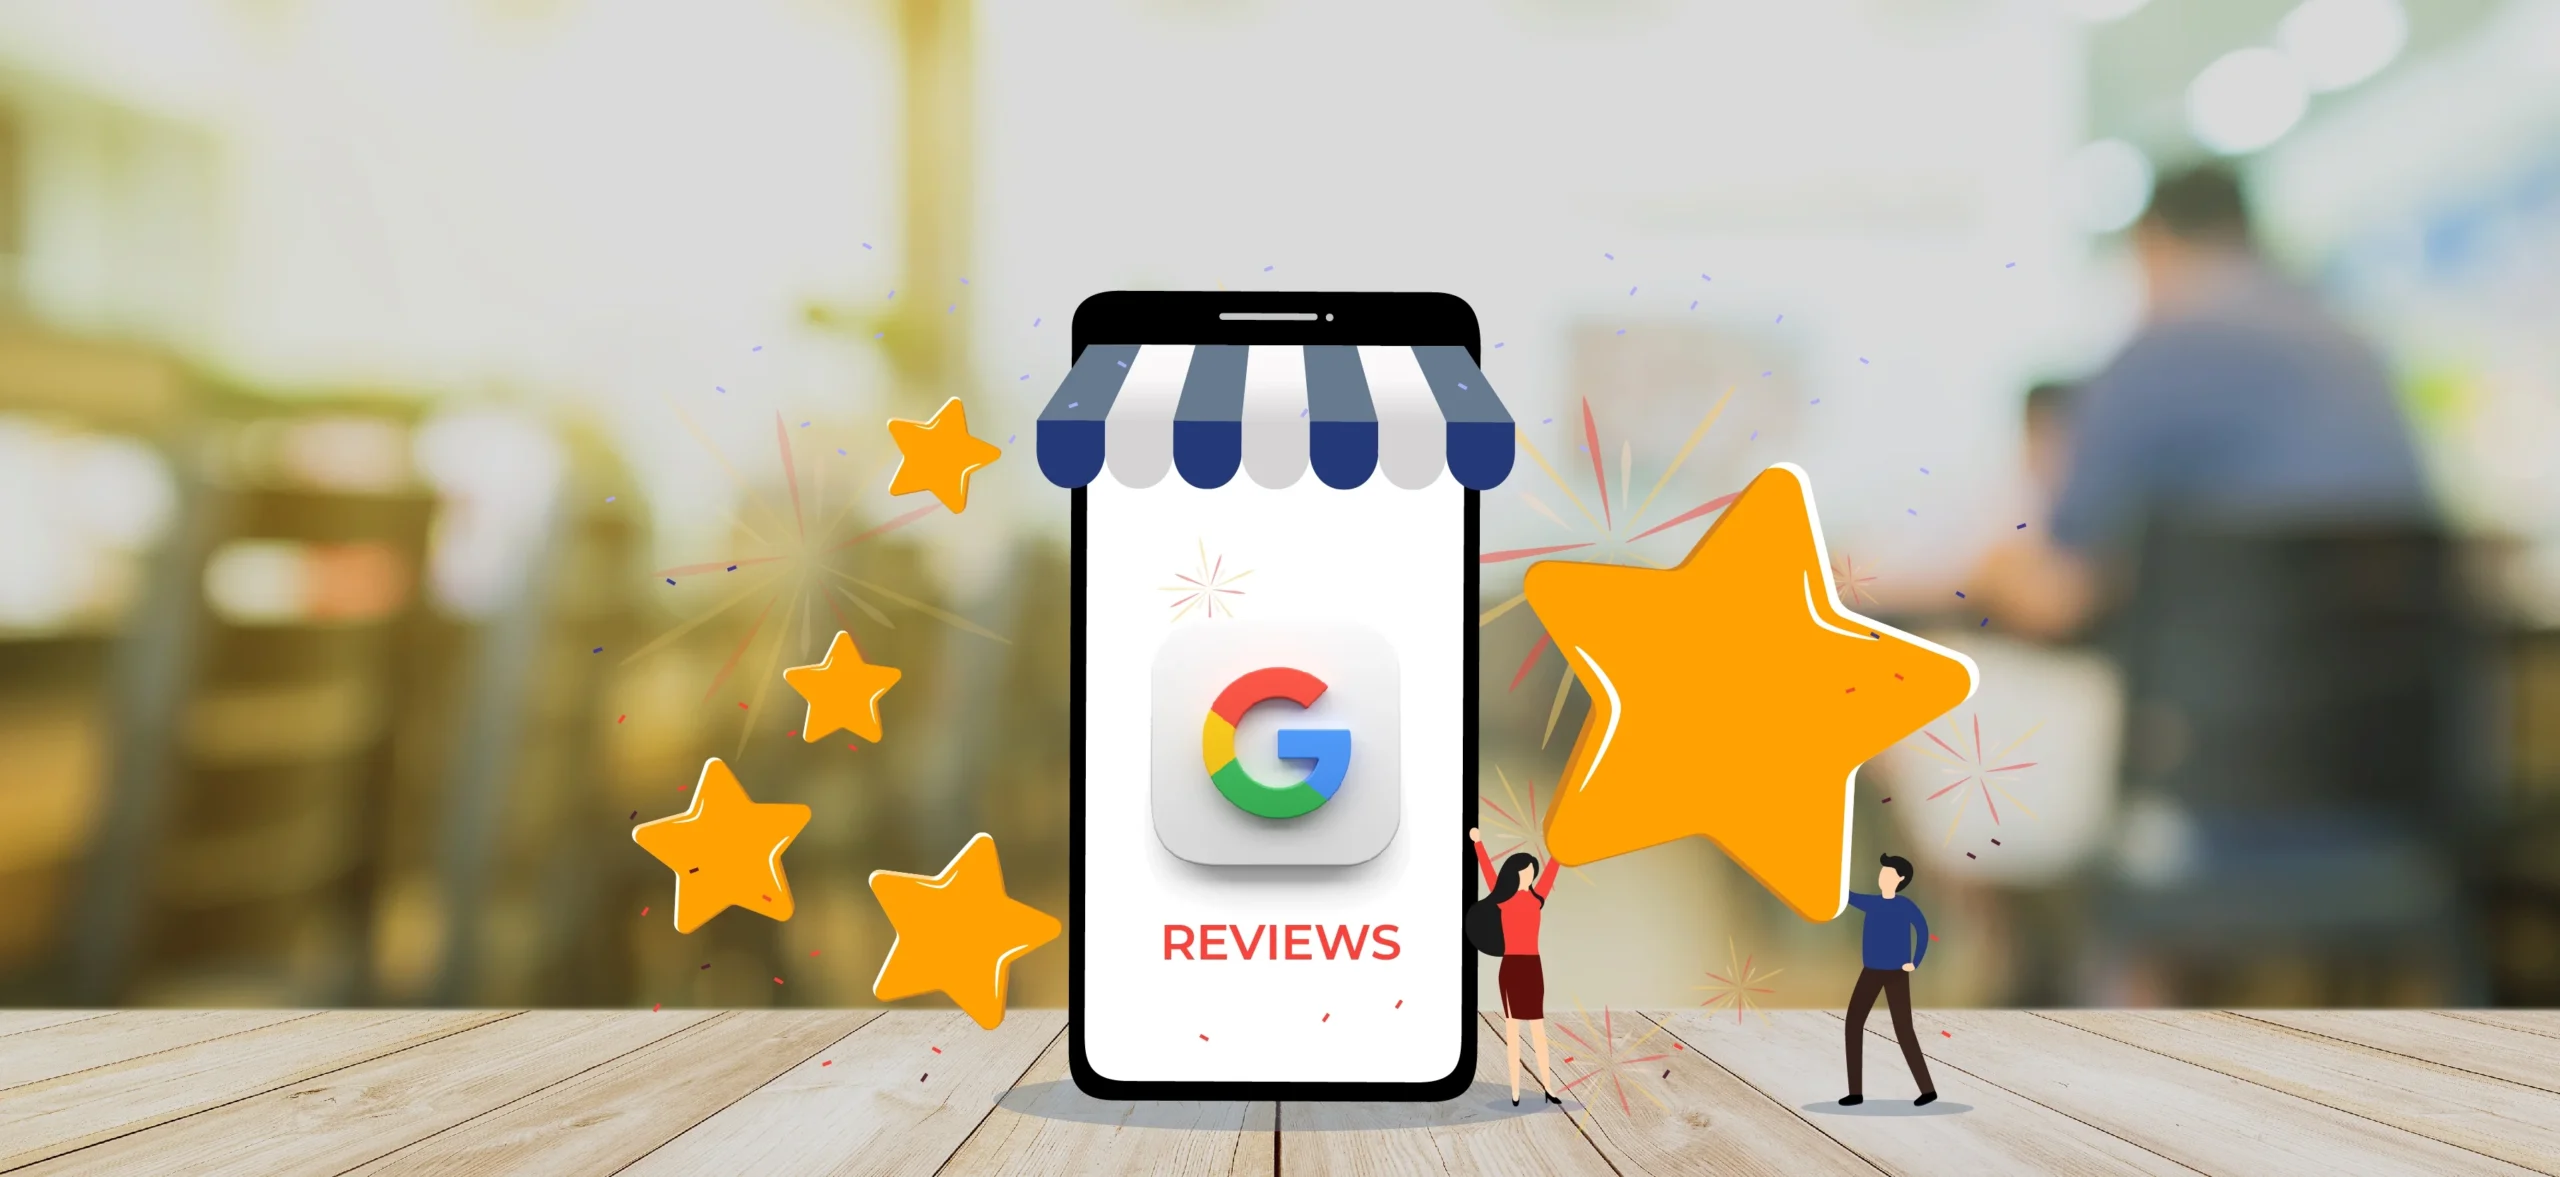 Benefits of Google Reviews